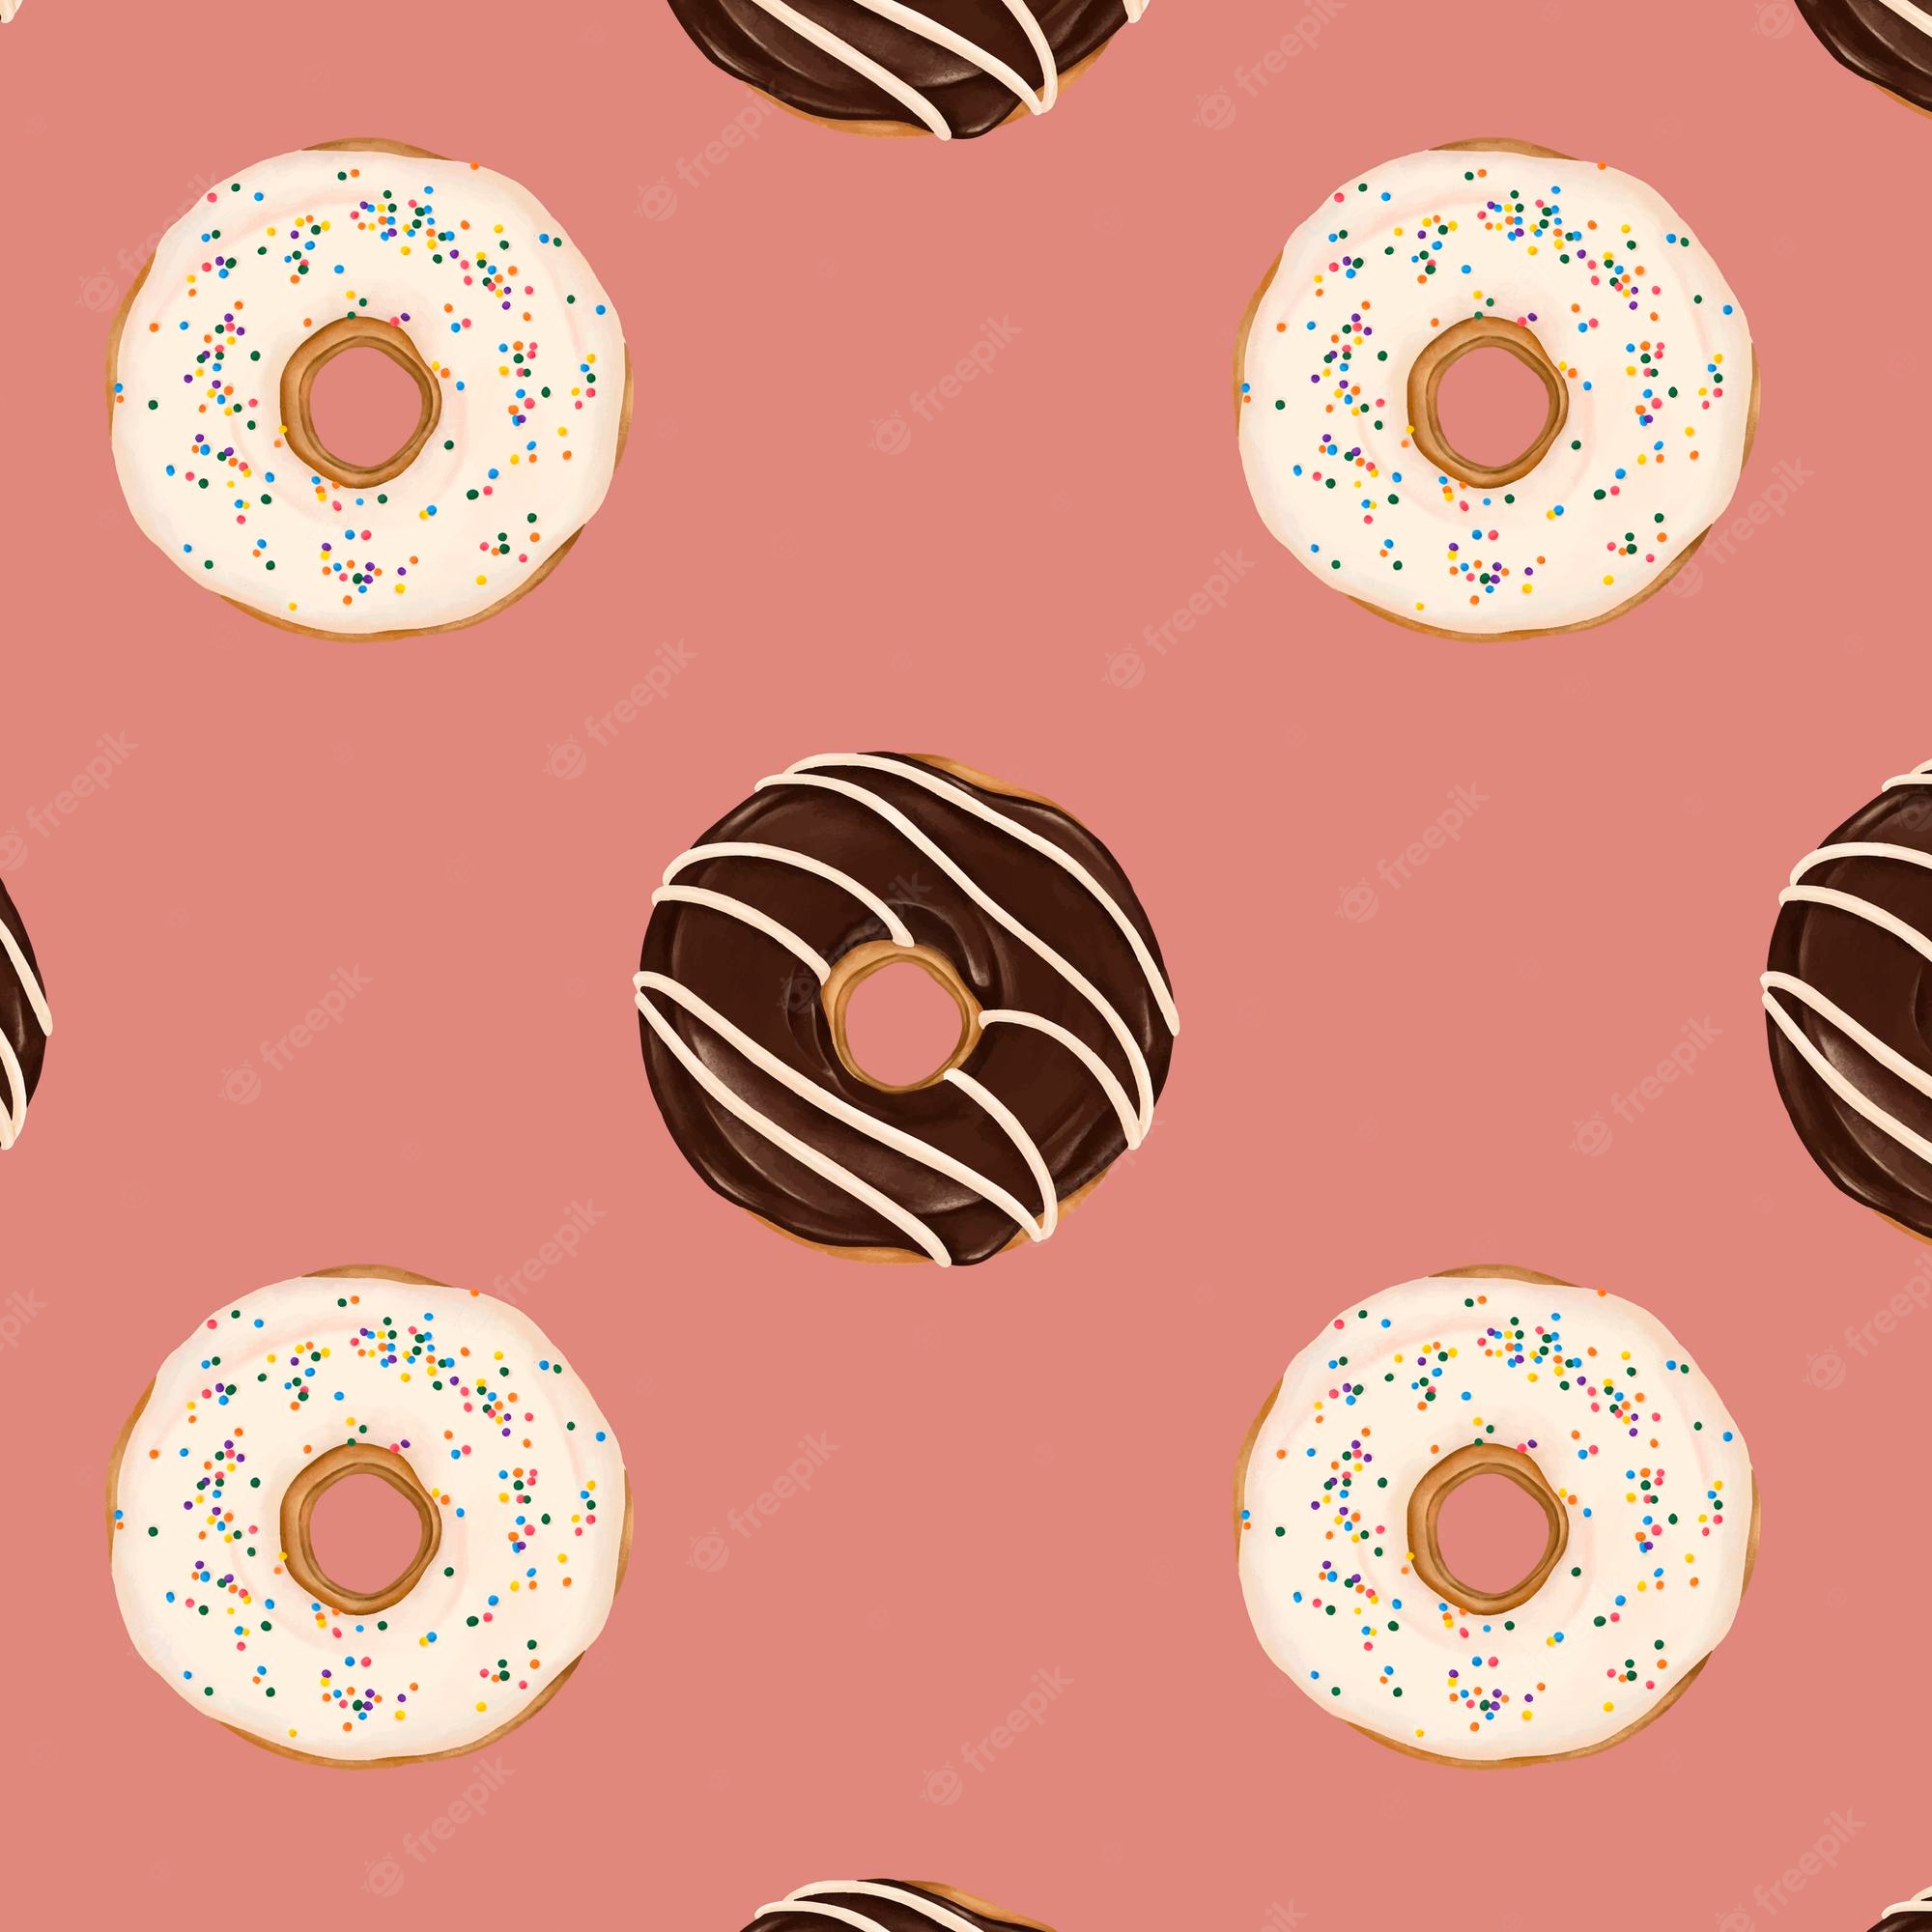 Donut wallpaper vectors illustrations for free download